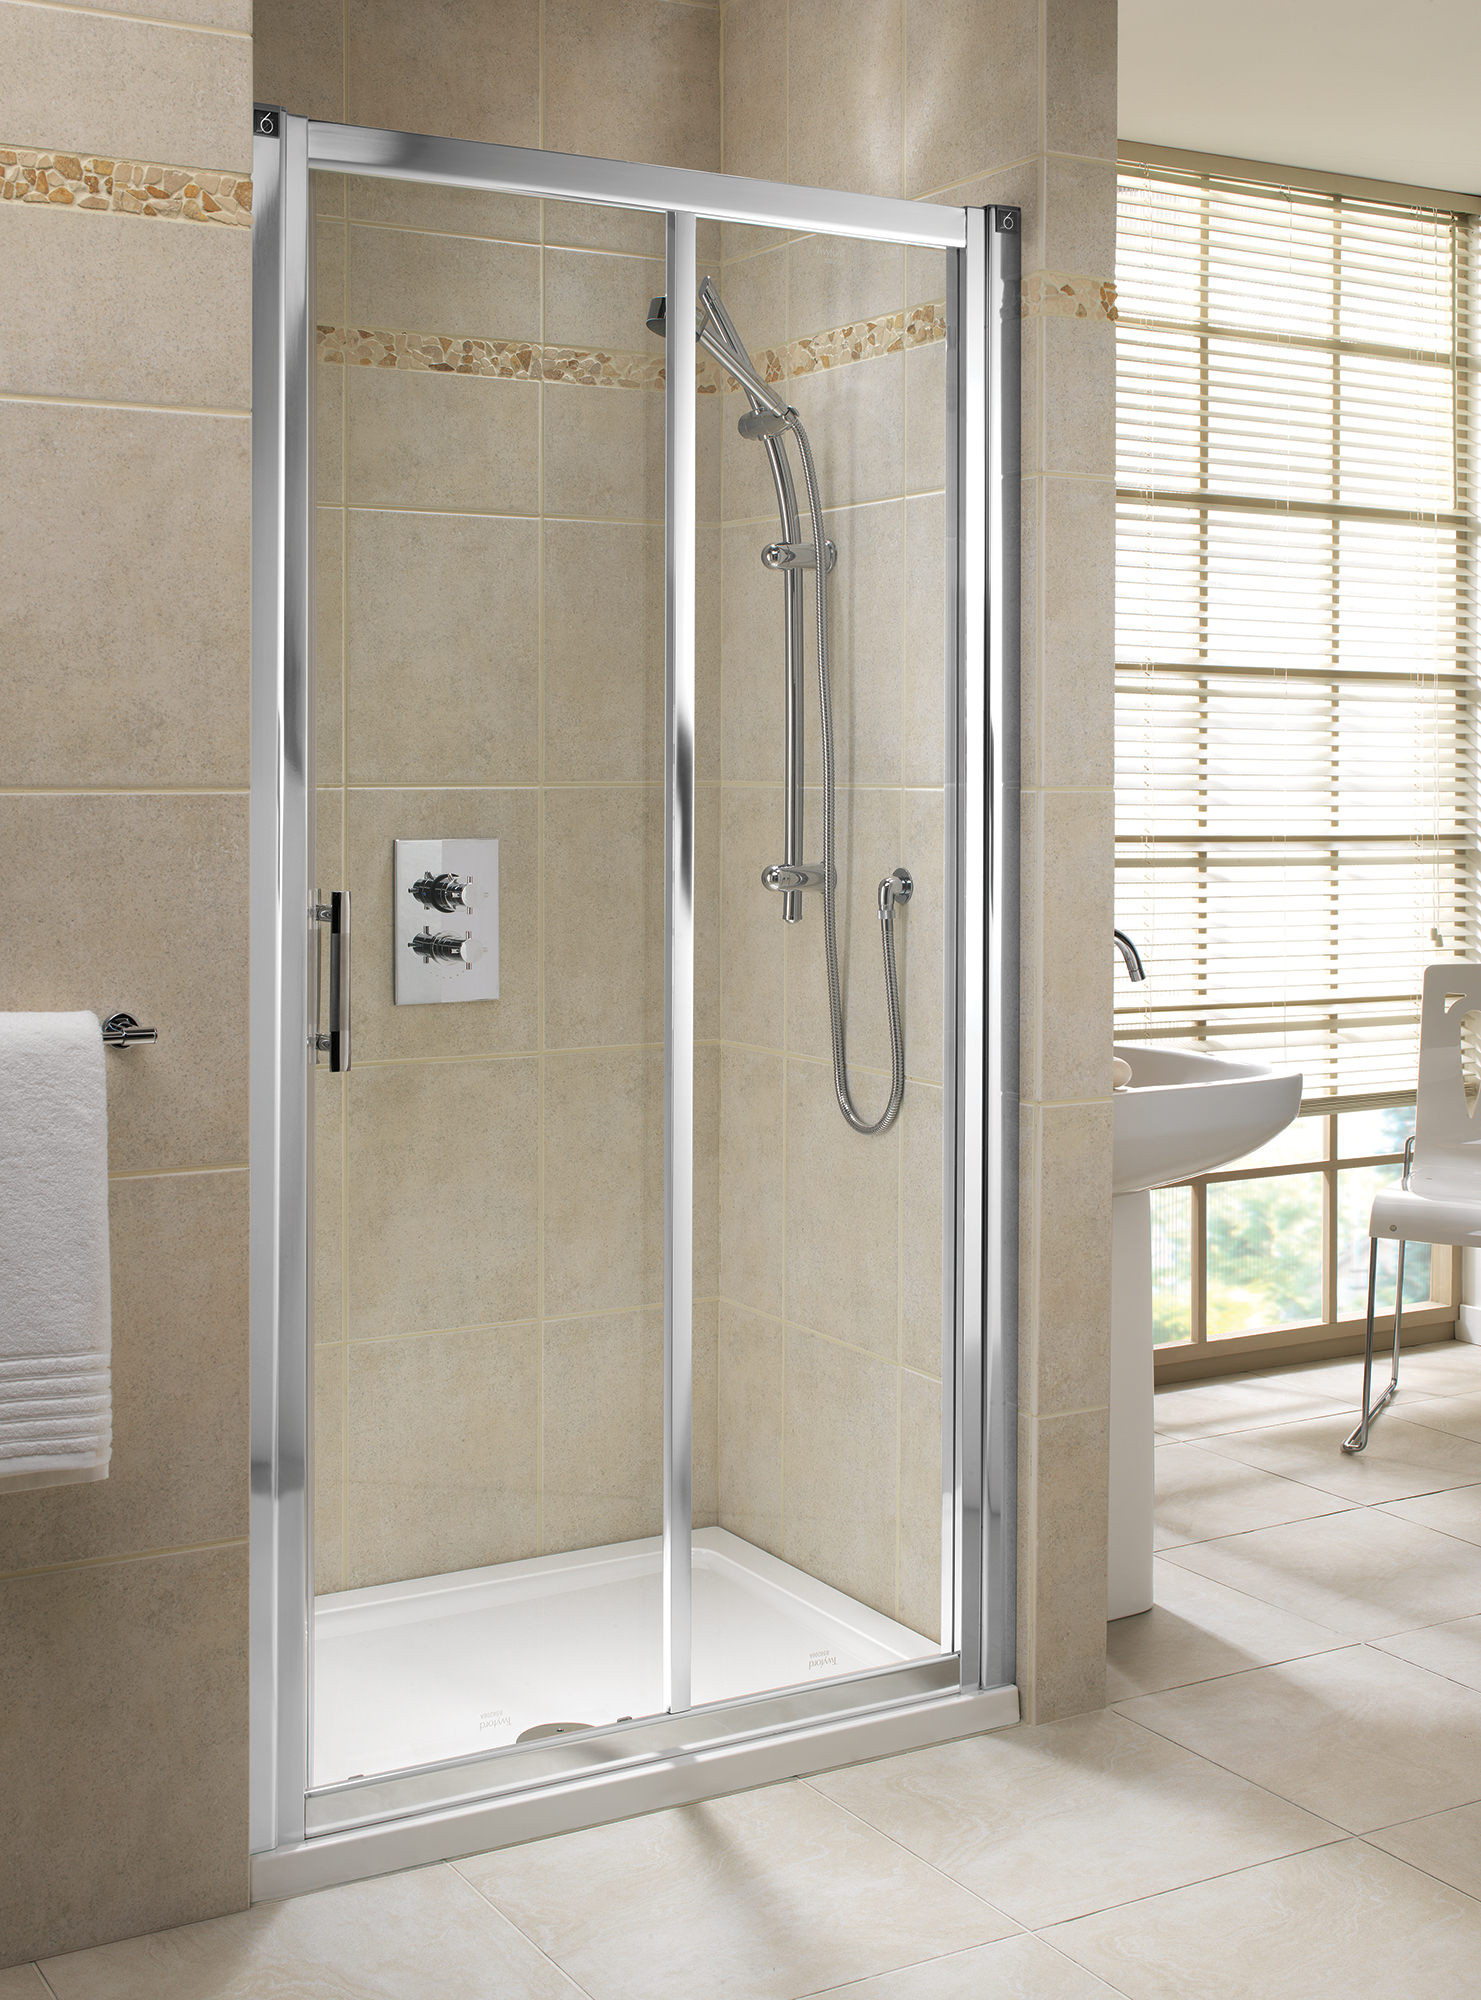 Bathroom Shower Doors
 Twyford Geo6 1200mm Sliding Shower Door Left Right Hand